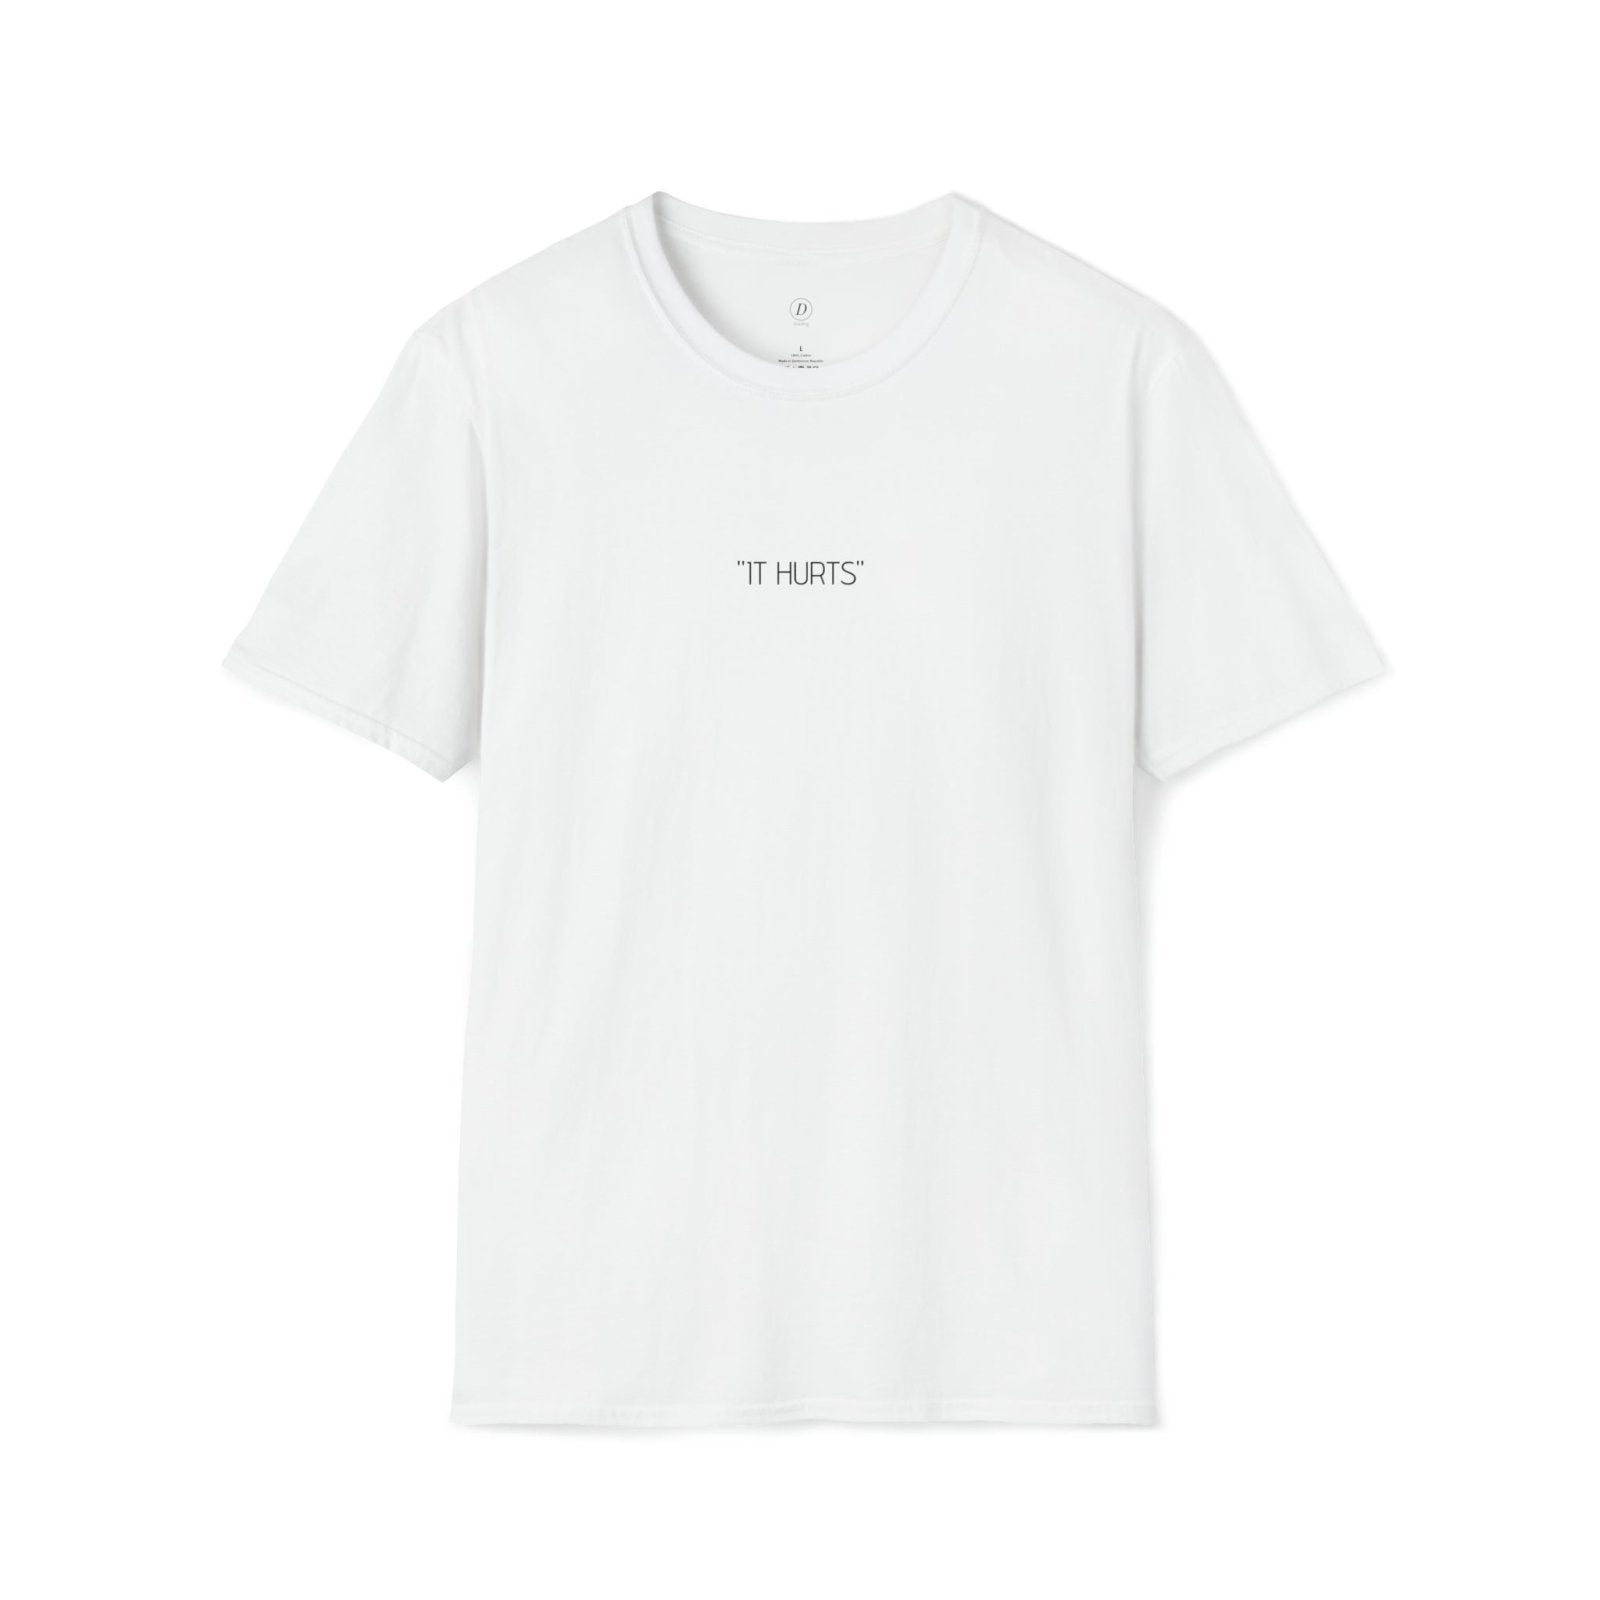 "IT HURT'S" inspirational soft style t-shirt - Dowding